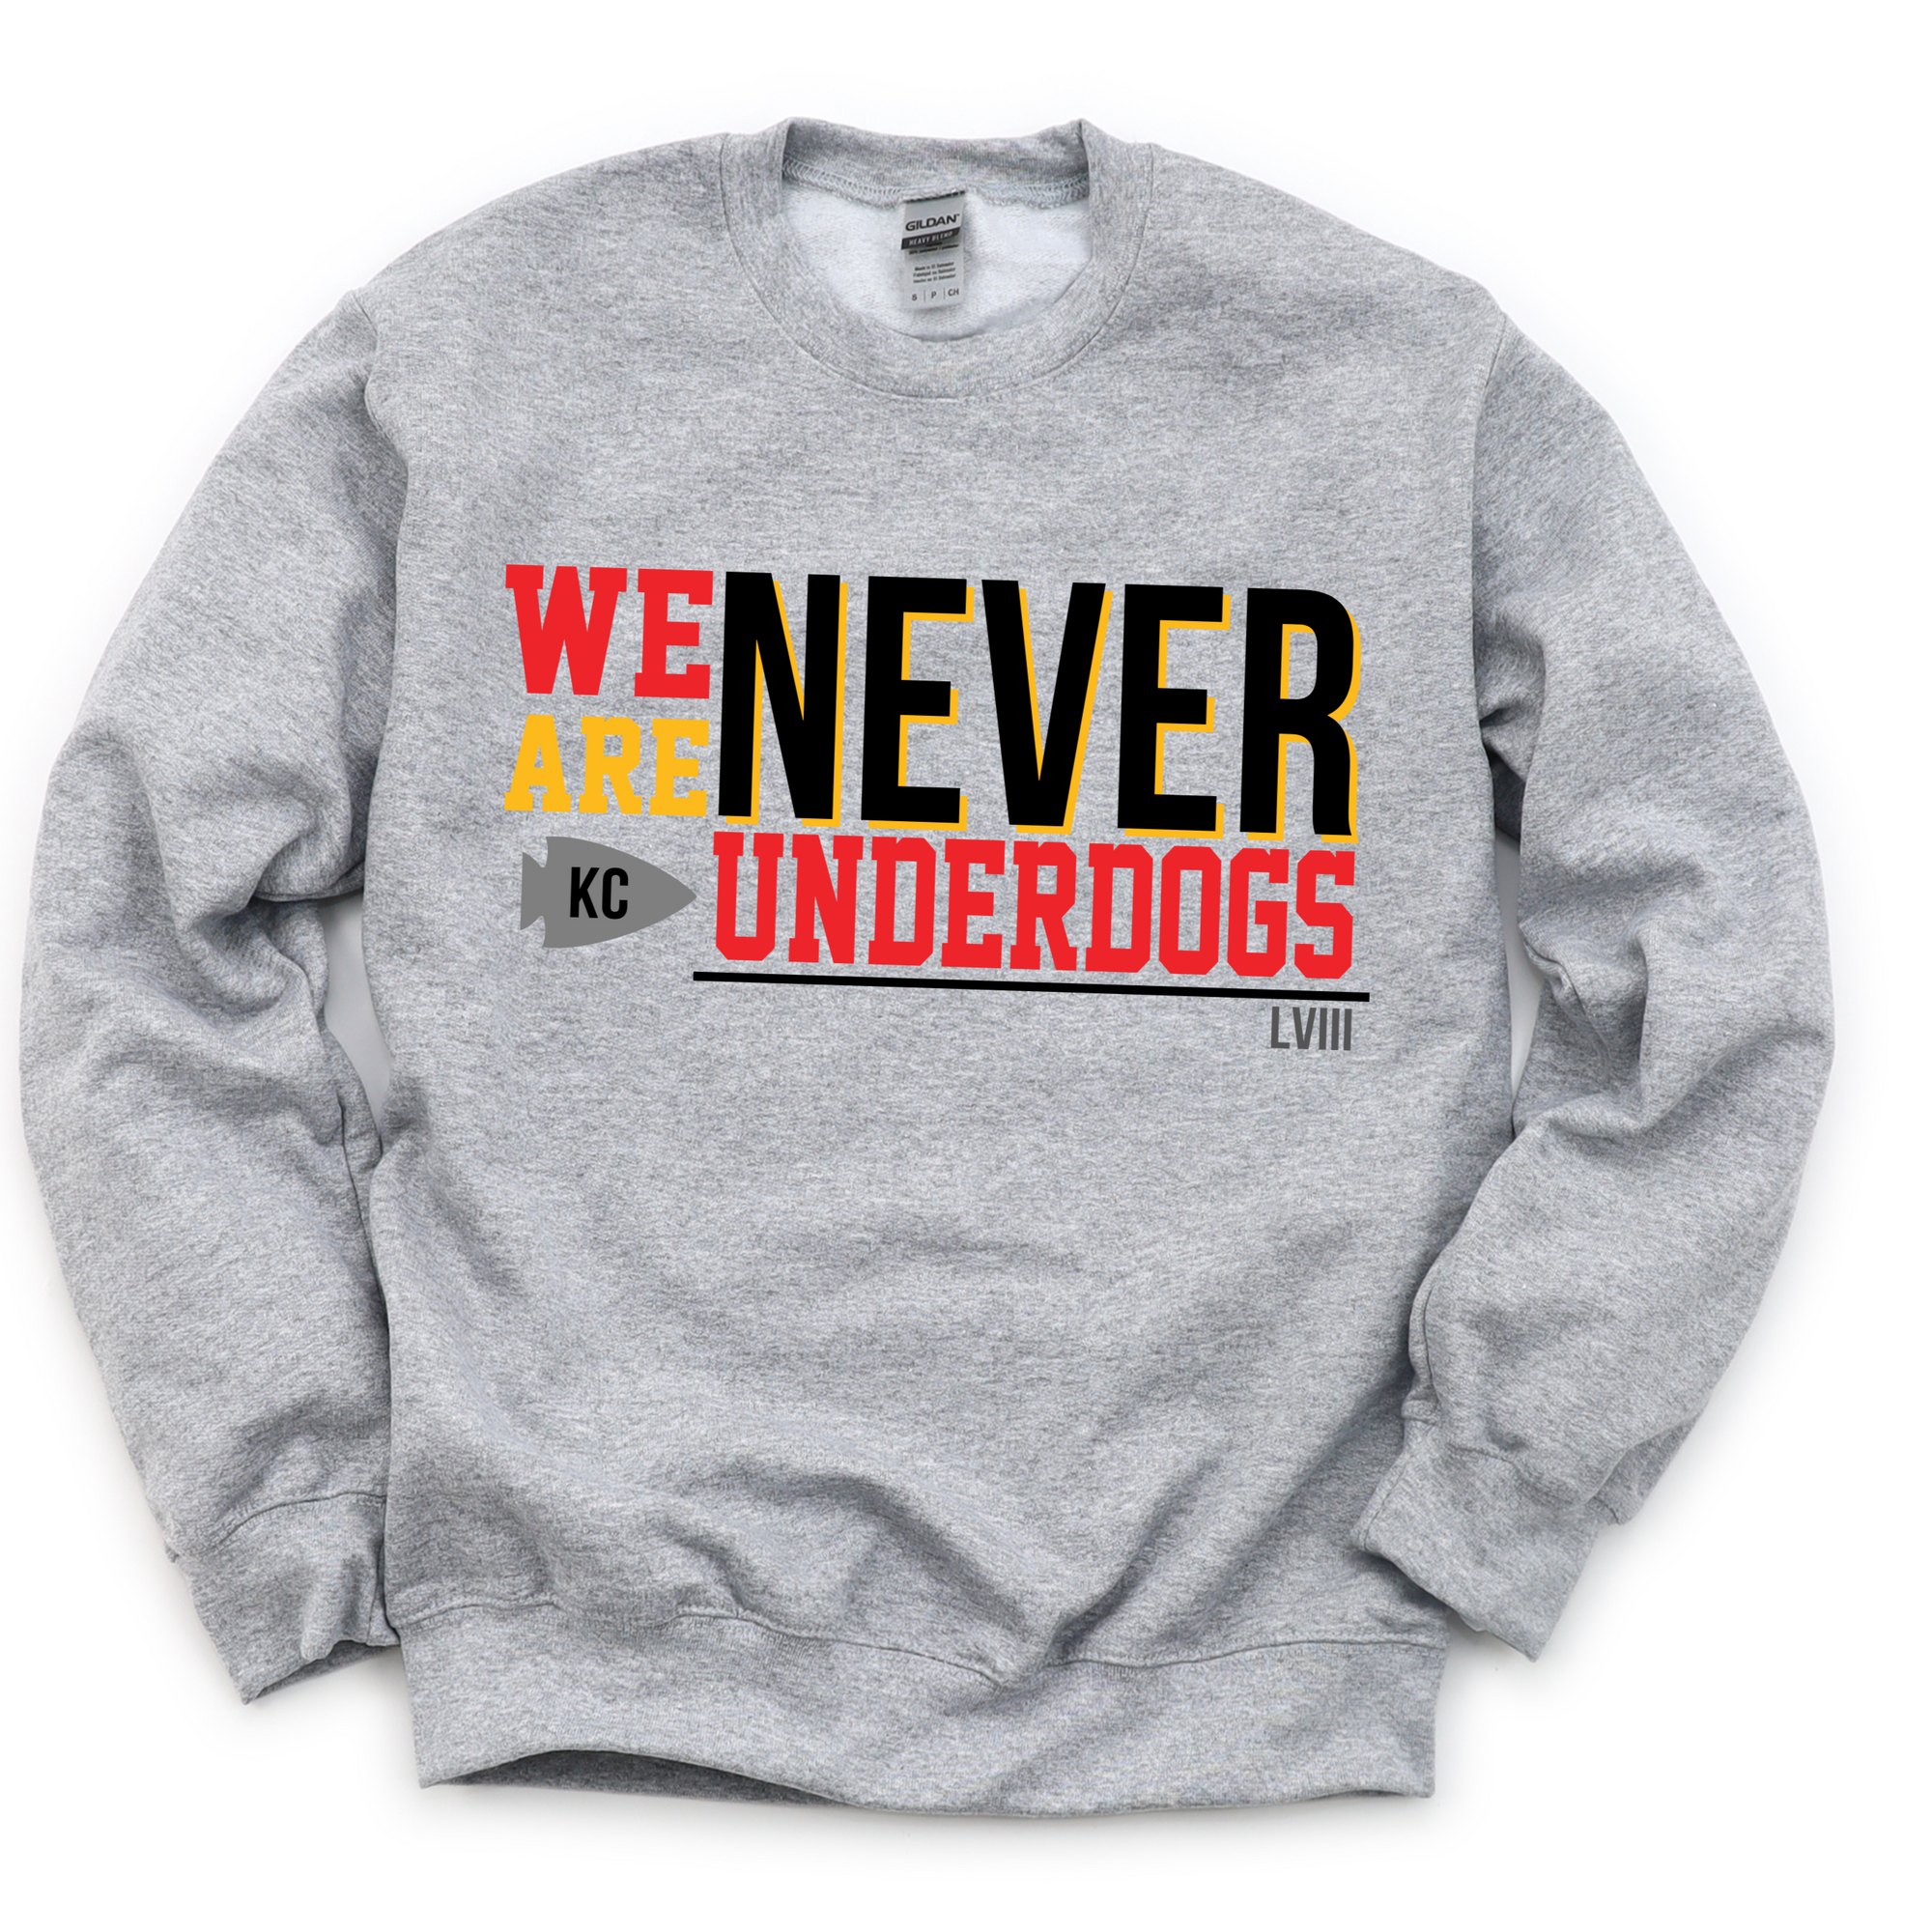 We are Never Underdogs Tee OR Sweatshirt